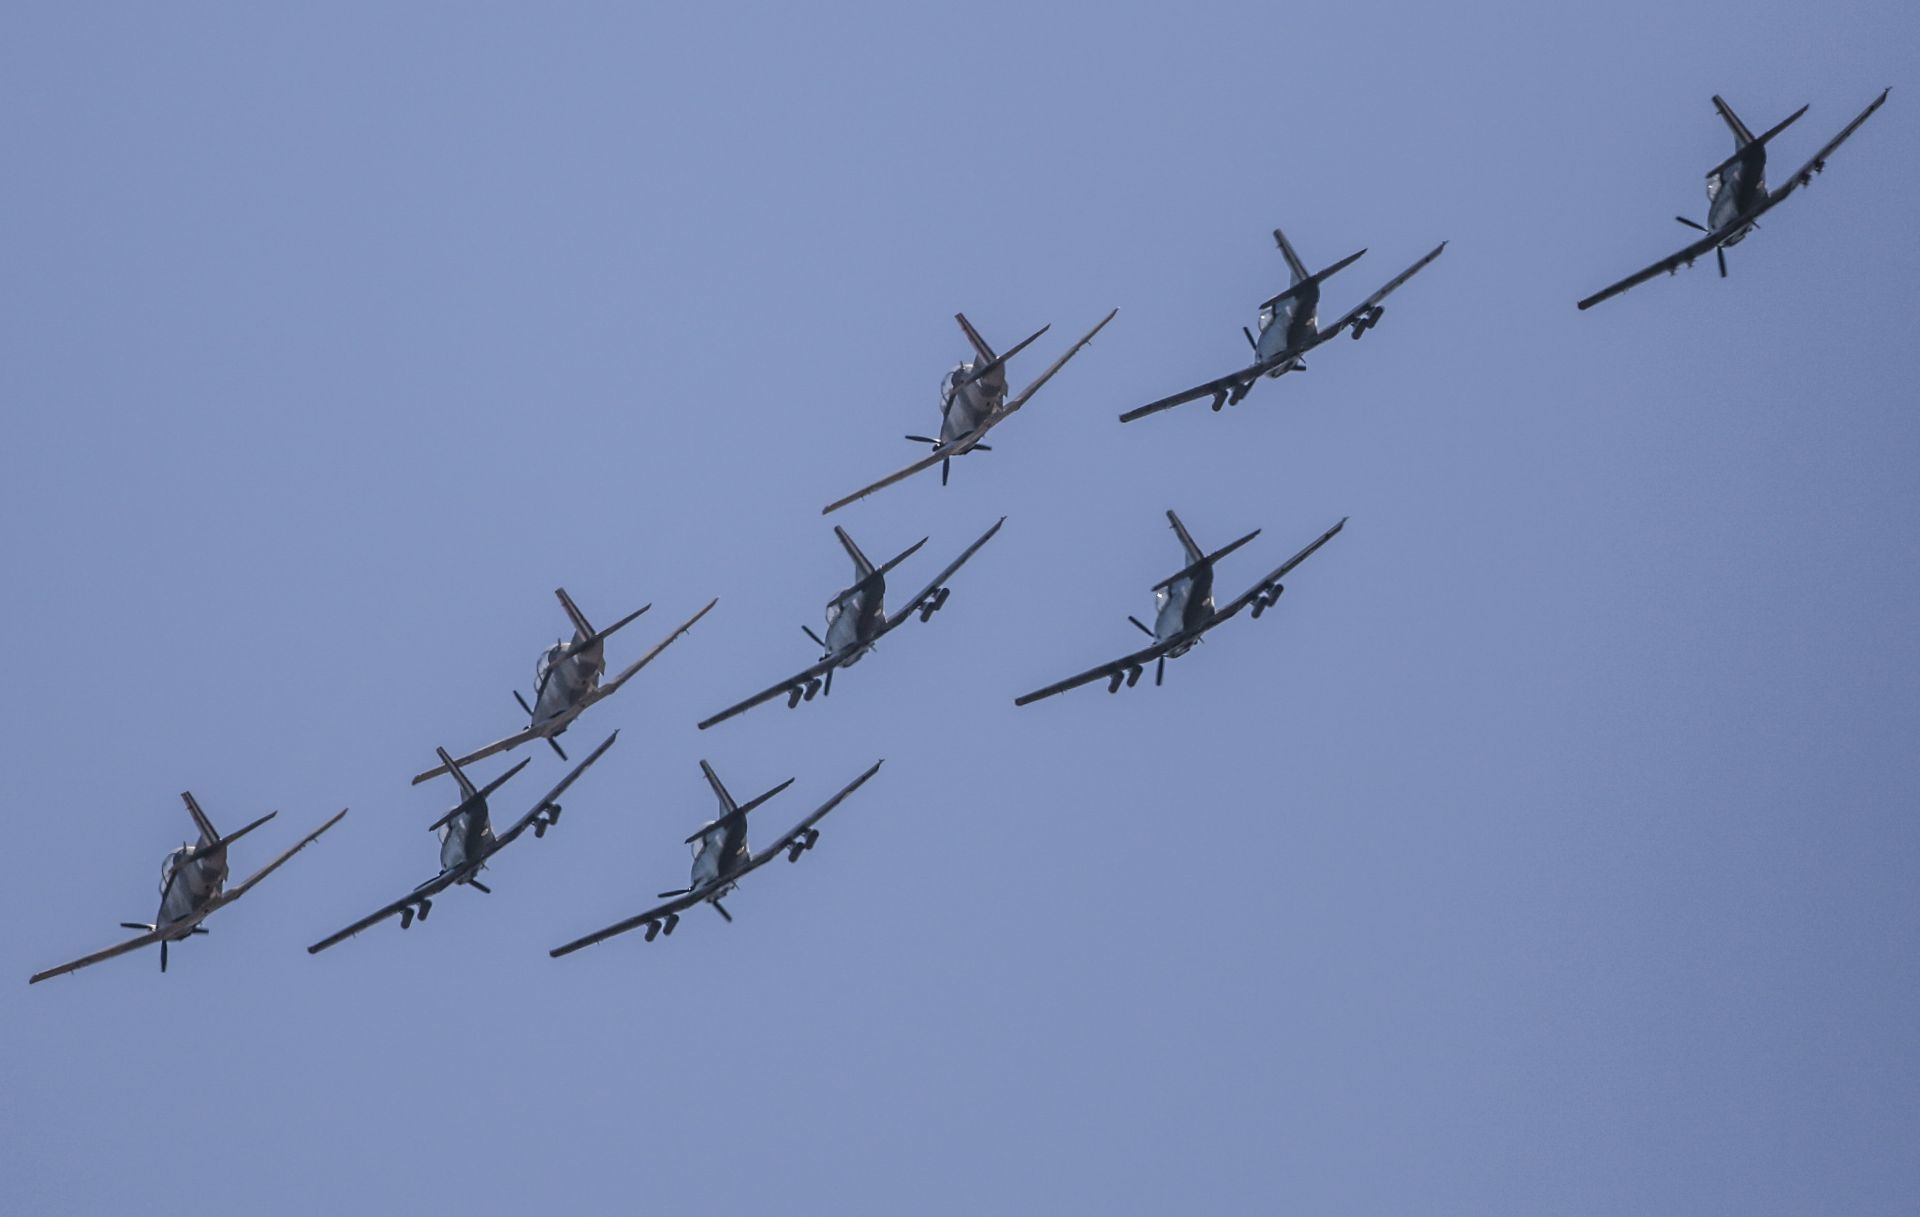 Diputados aprueban proteger espacio aéreo; oposición acusa ‘militarización del cielo’